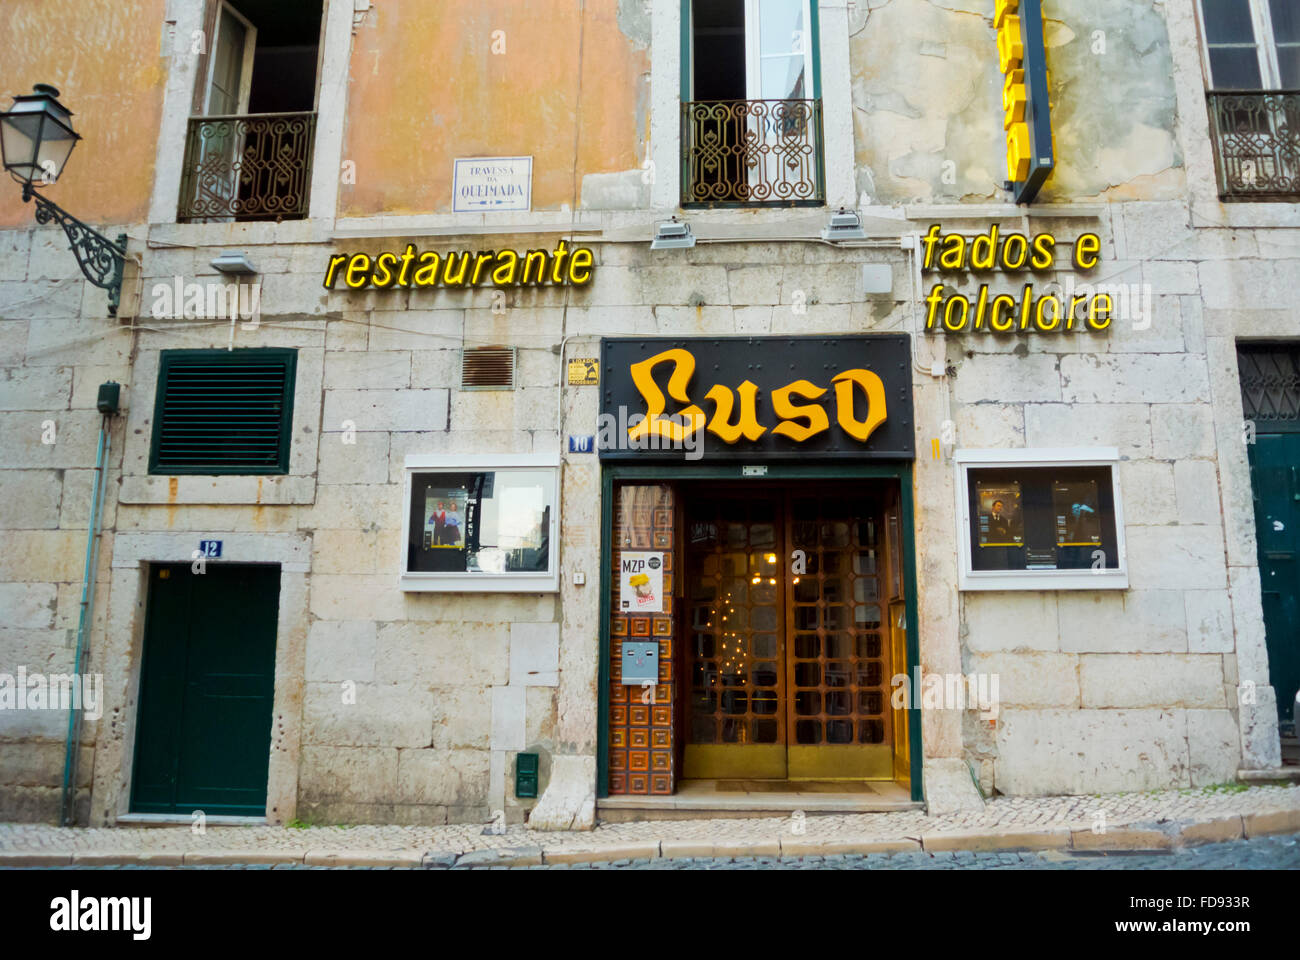 Luso, Fado restaurant, Bairro Alto, Lisbon, Portugal Stock Photo